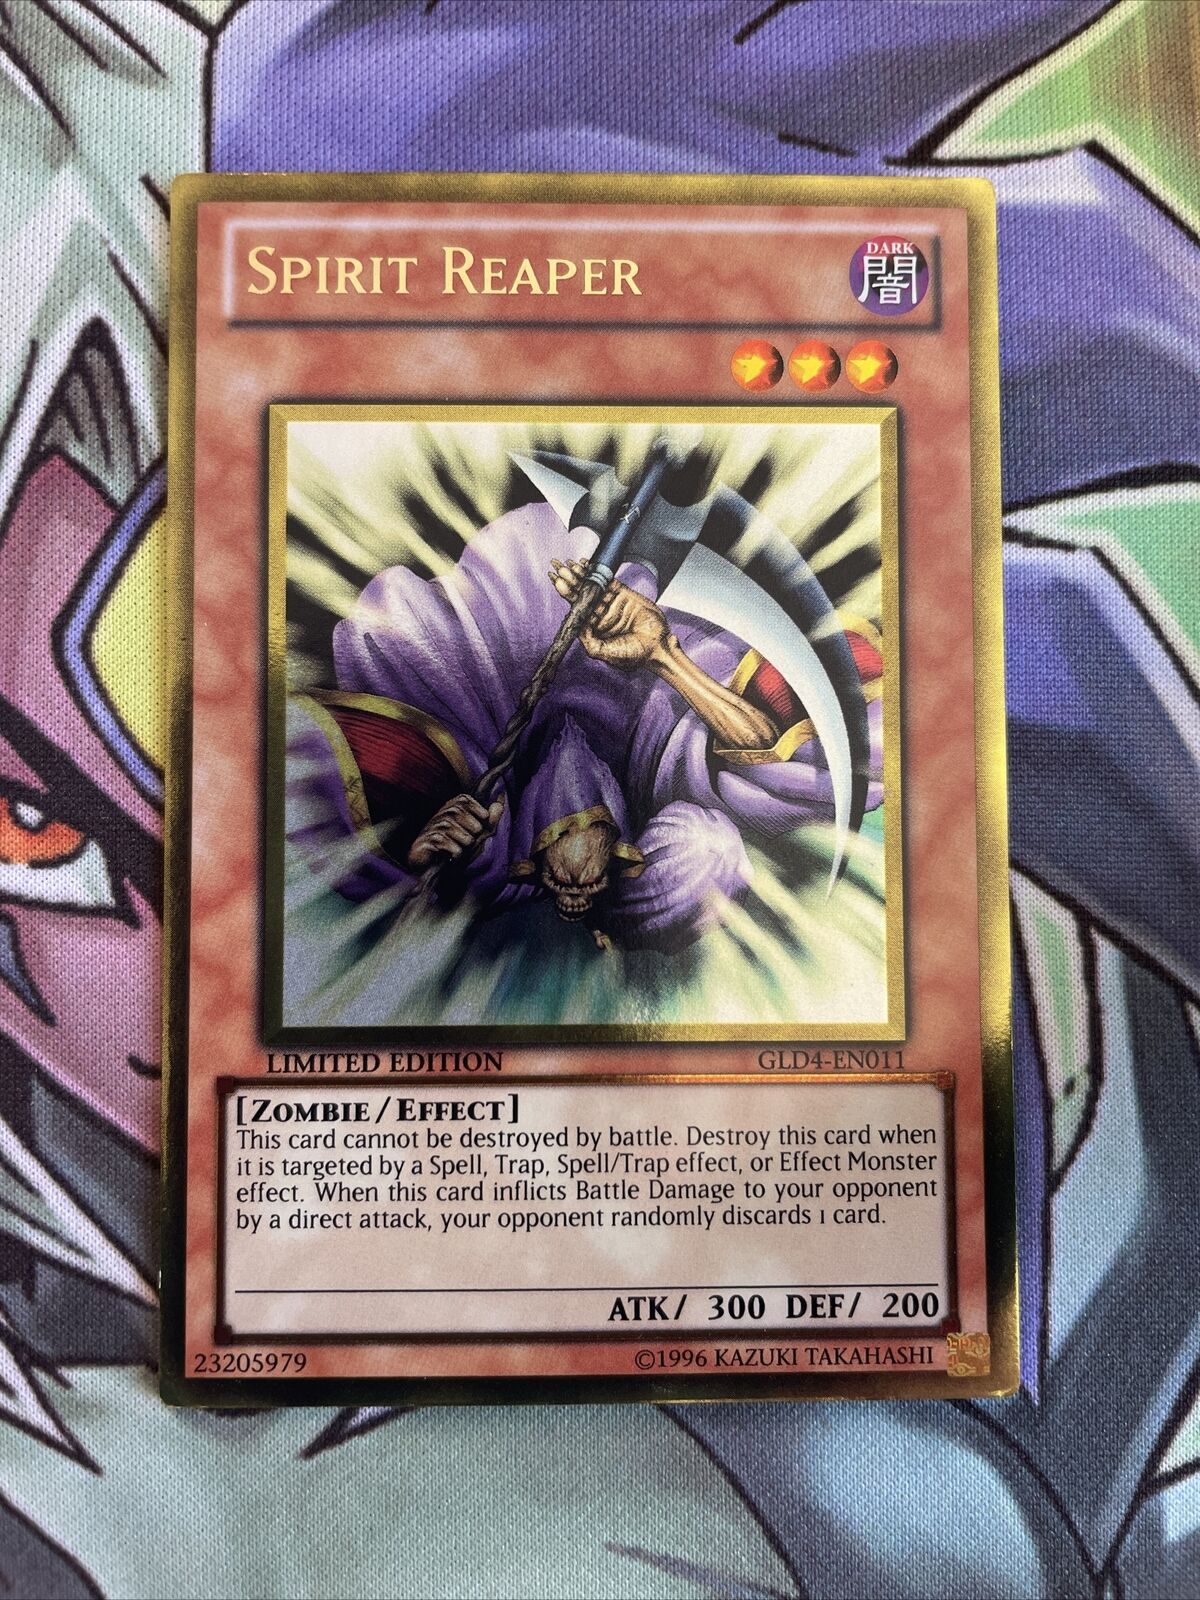 GLD4-EN011 Spirit Reaper Gold Rare Limited Edition NM Yugioh Card